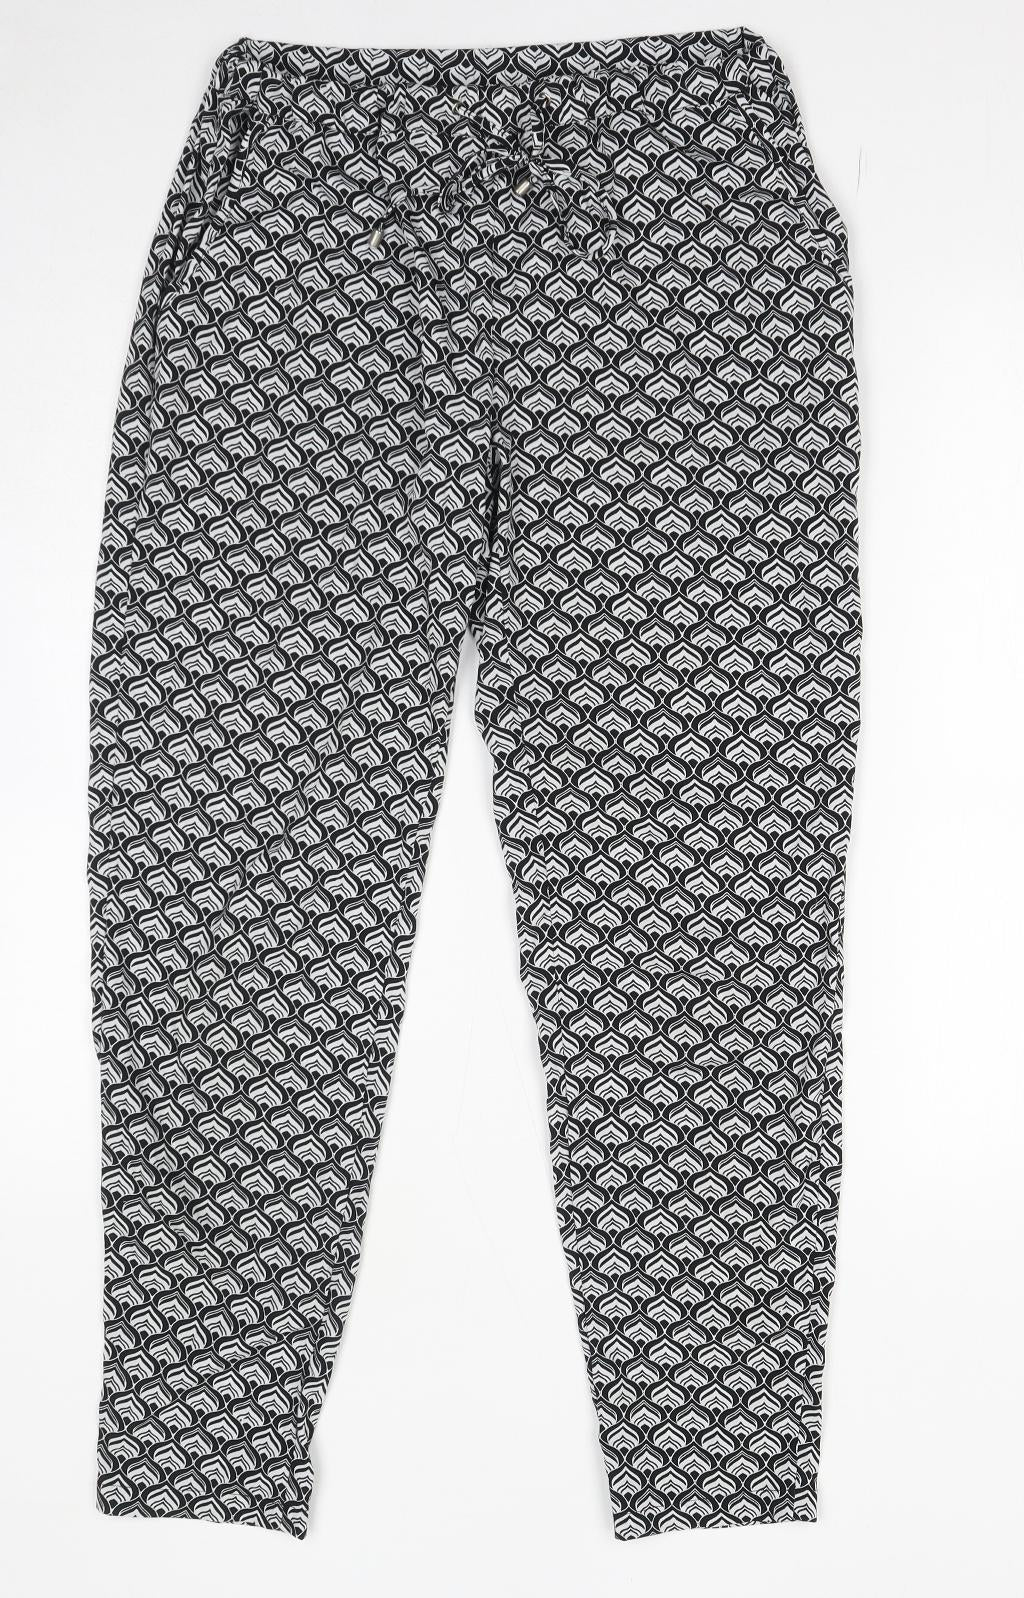 New Look Womens Black Geometric Polyester Harem Trousers Size 10 L28 in Regular Drawstring